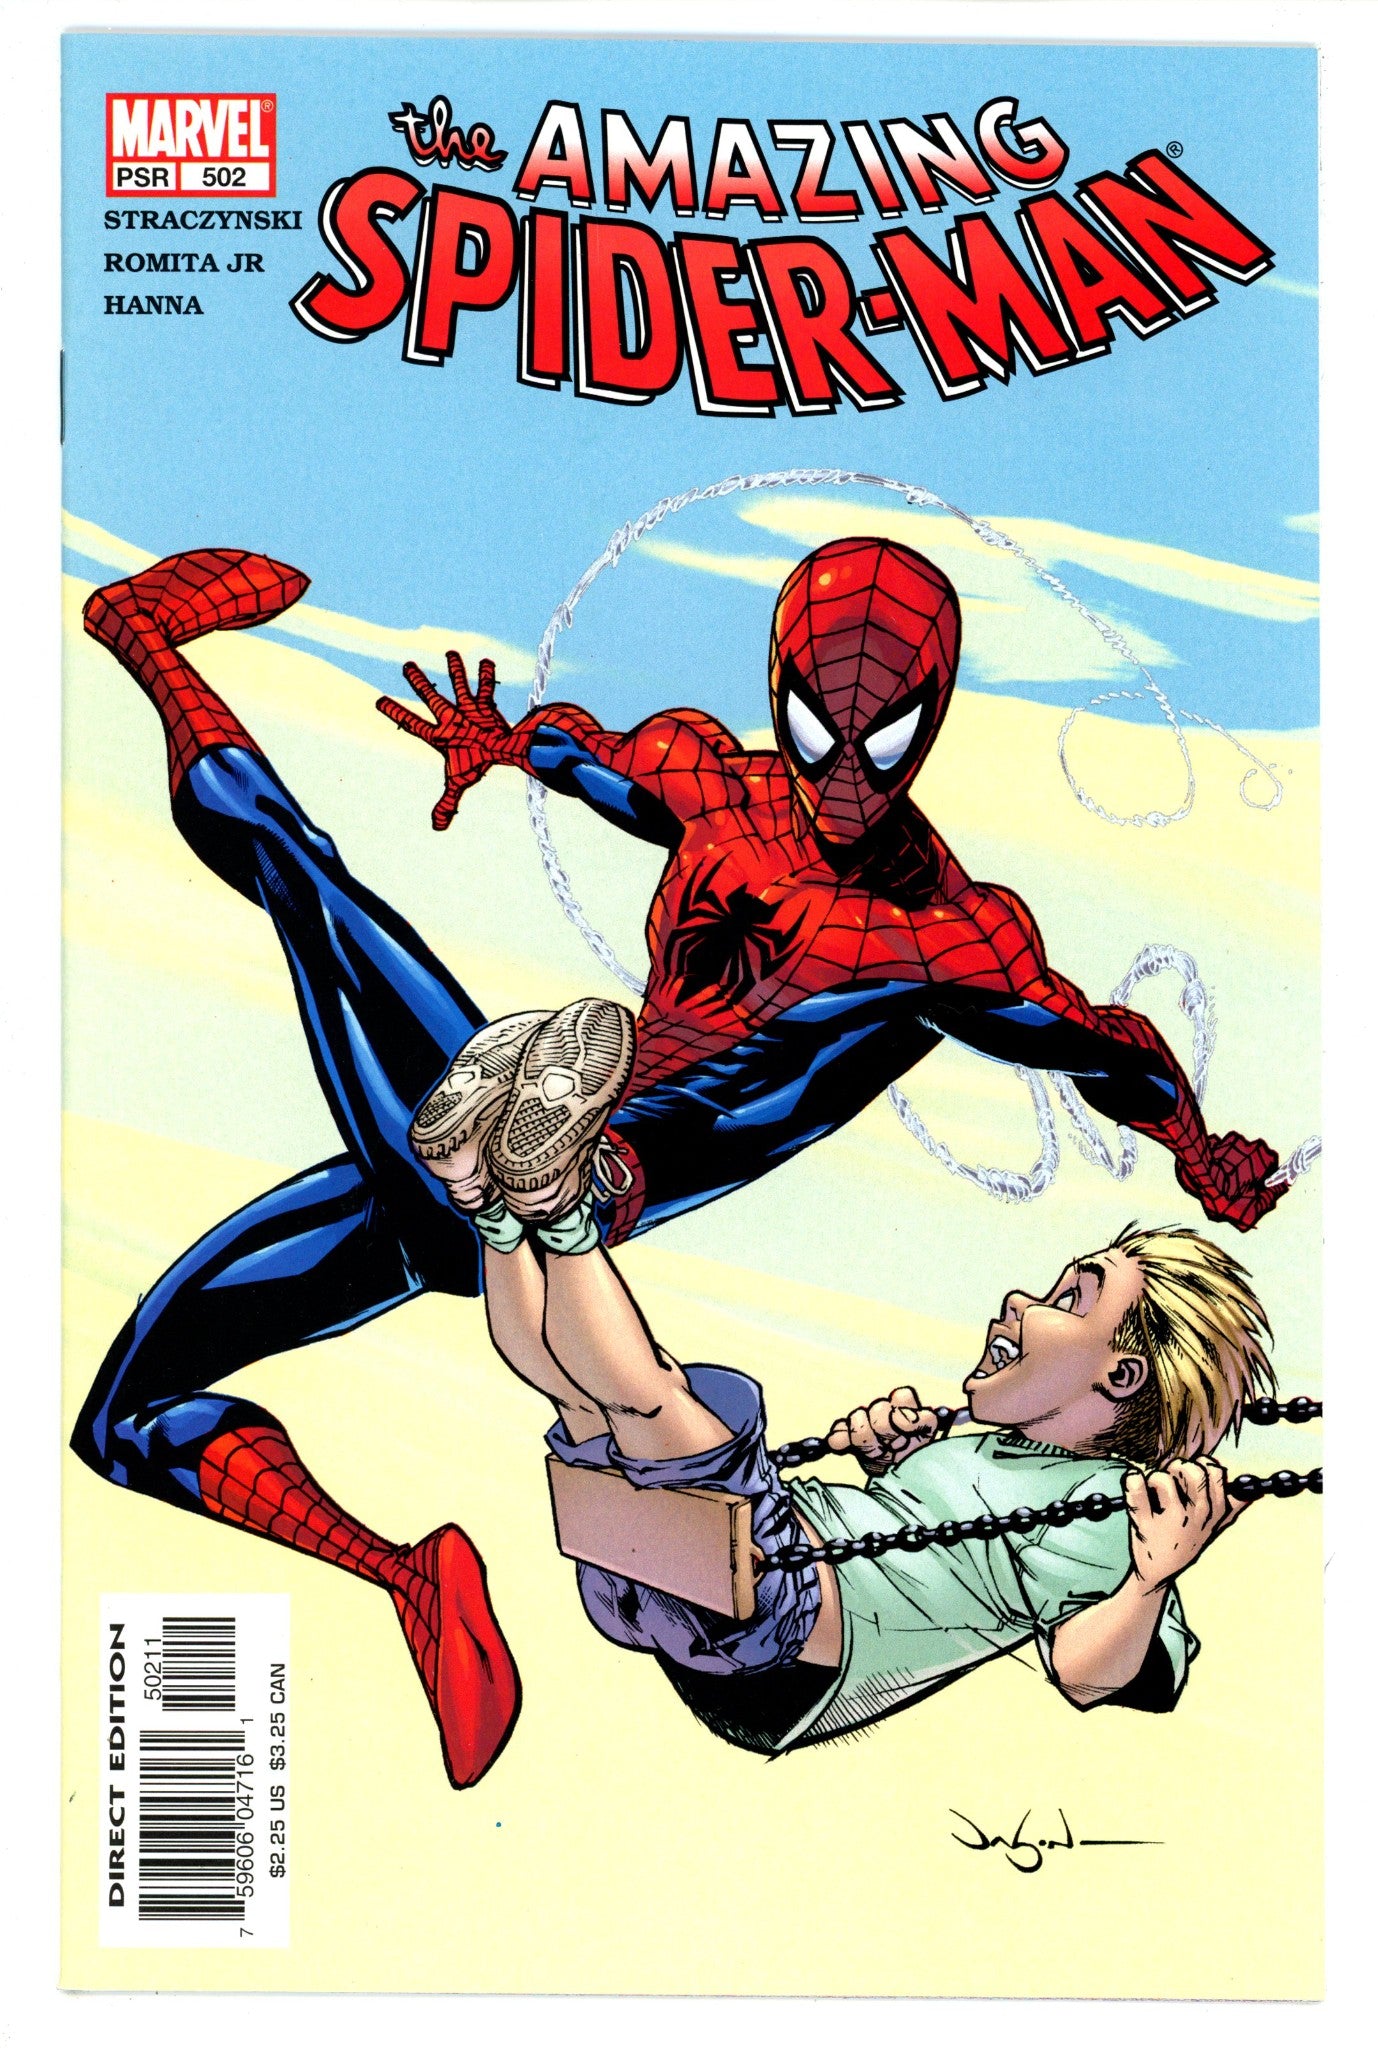 The Amazing Spider-Man Vol 2 502 High Grade (2004) 